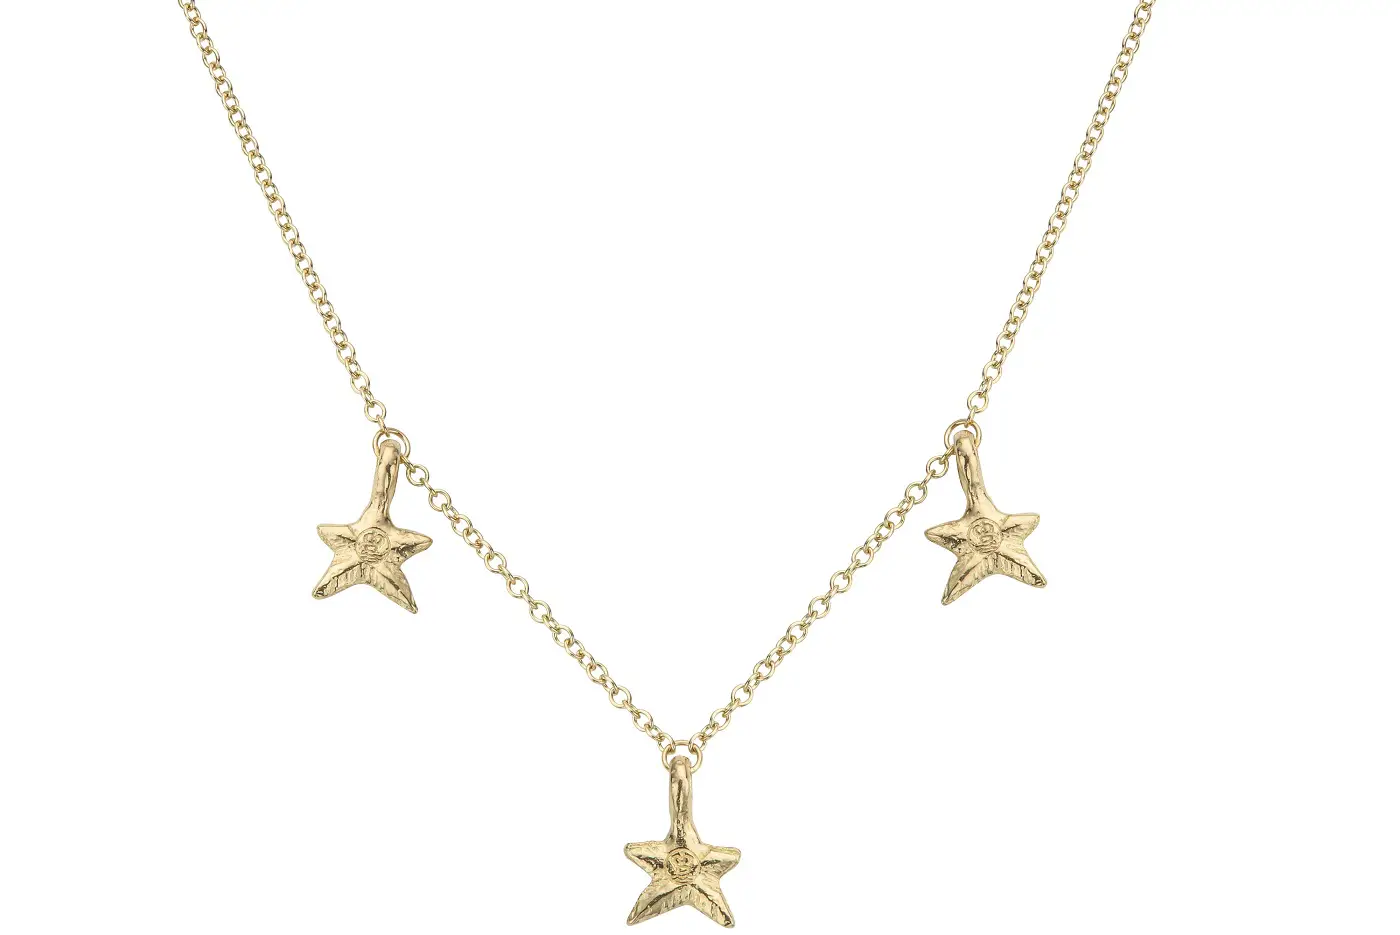 Kate Middleton wore Daniella Draper Gold Three Star Necklace